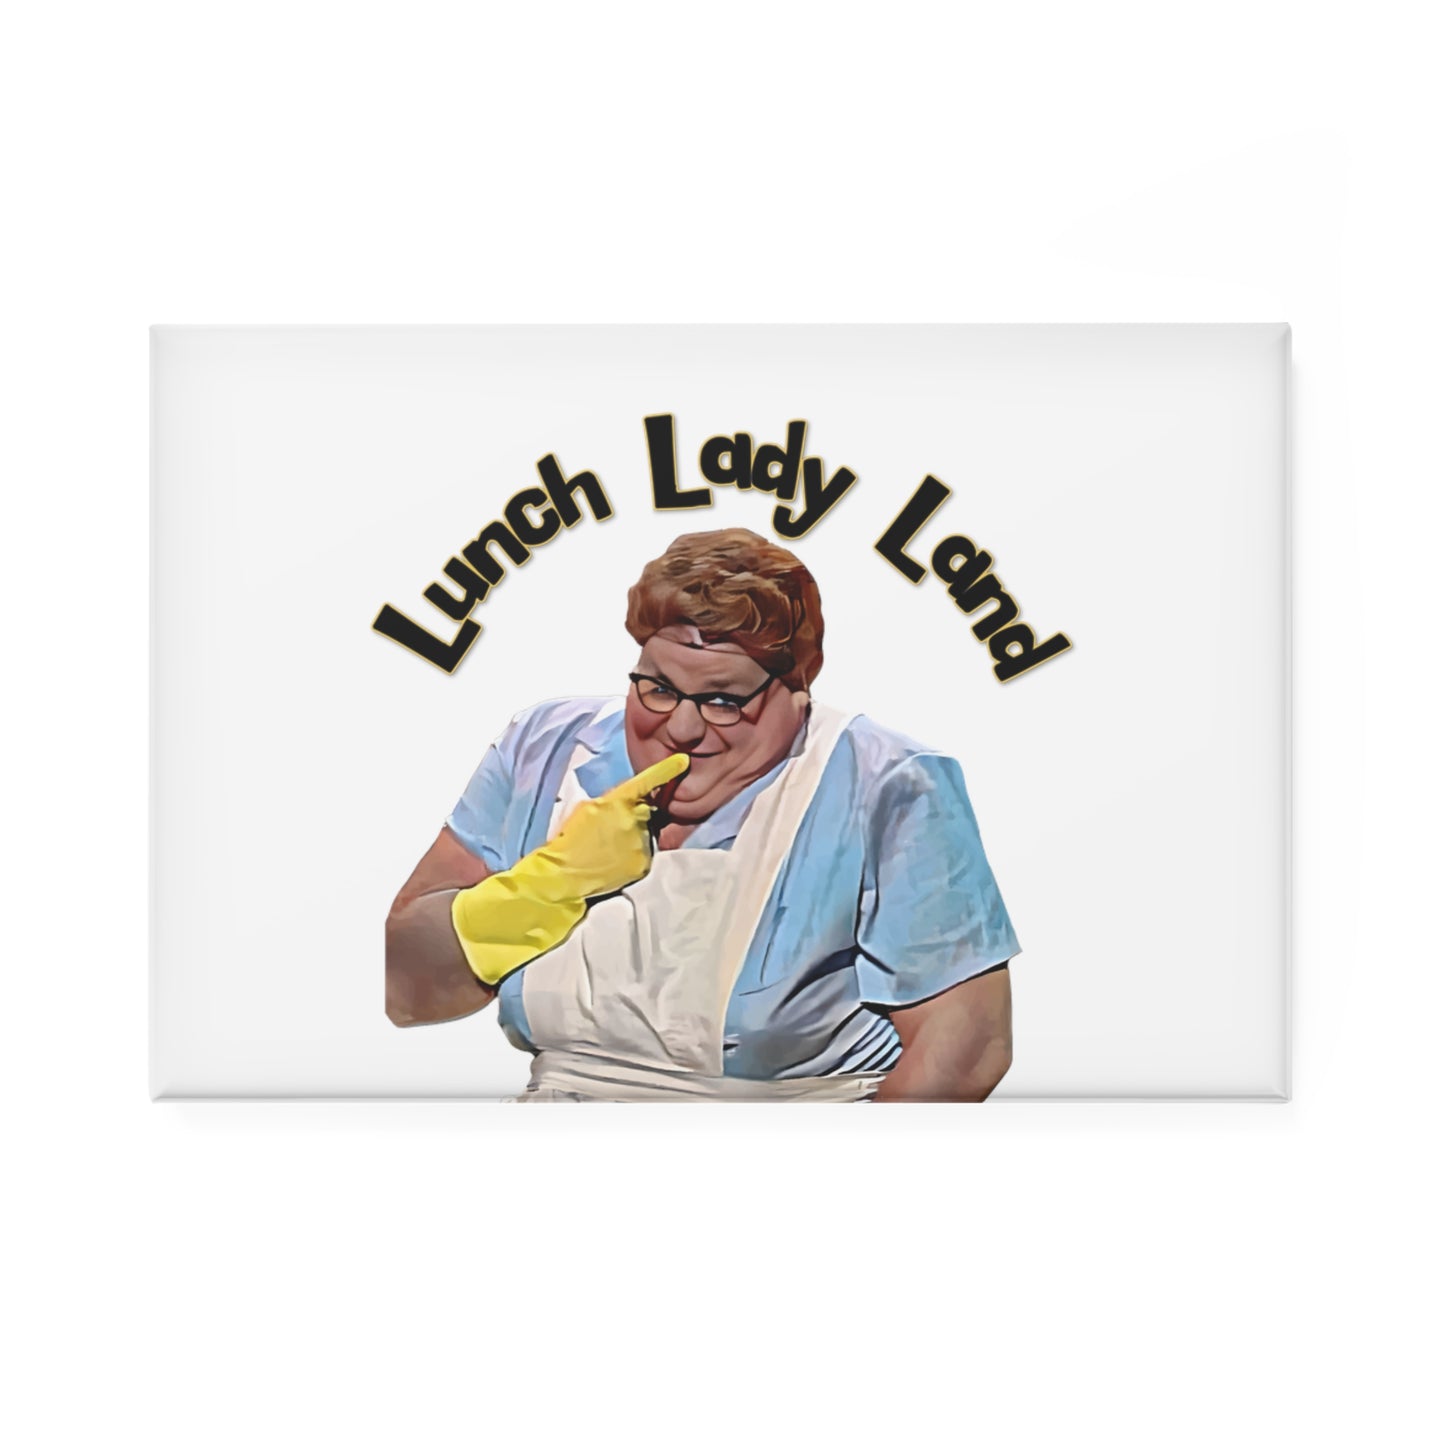 Lunch lady, Chris Farley, Adam Sandler, SNL, Old School Humor, Magnet